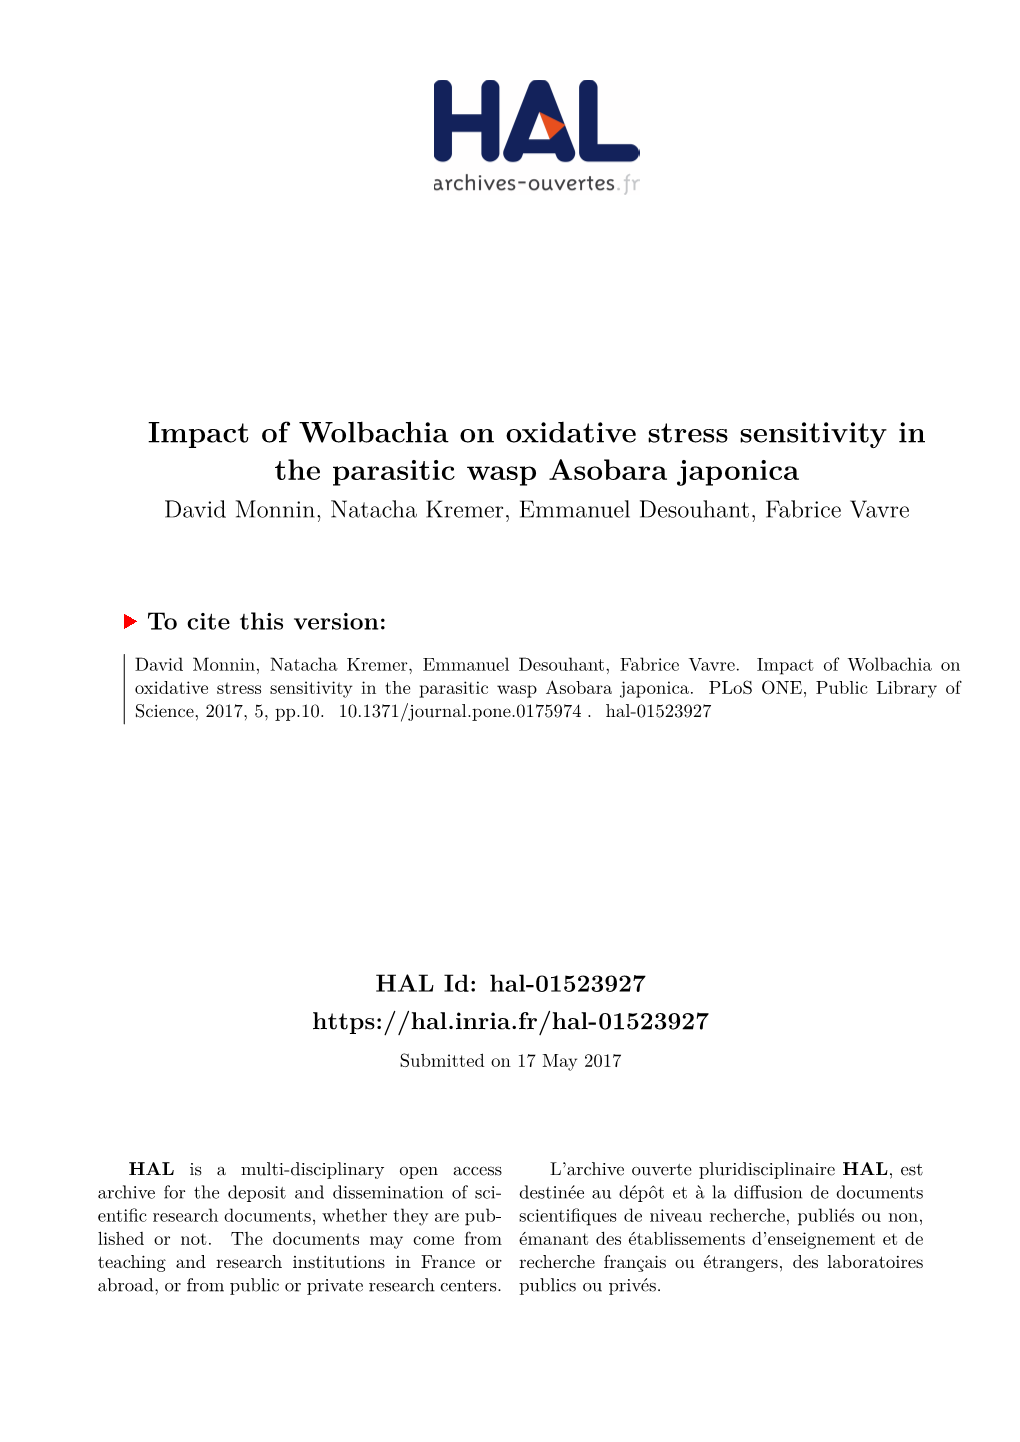 Impact of Wolbachia on Oxidative Stress Sensitivity in the Parasitic Wasp Asobara Japonica David Monnin, Natacha Kremer, Emmanuel Desouhant, Fabrice Vavre